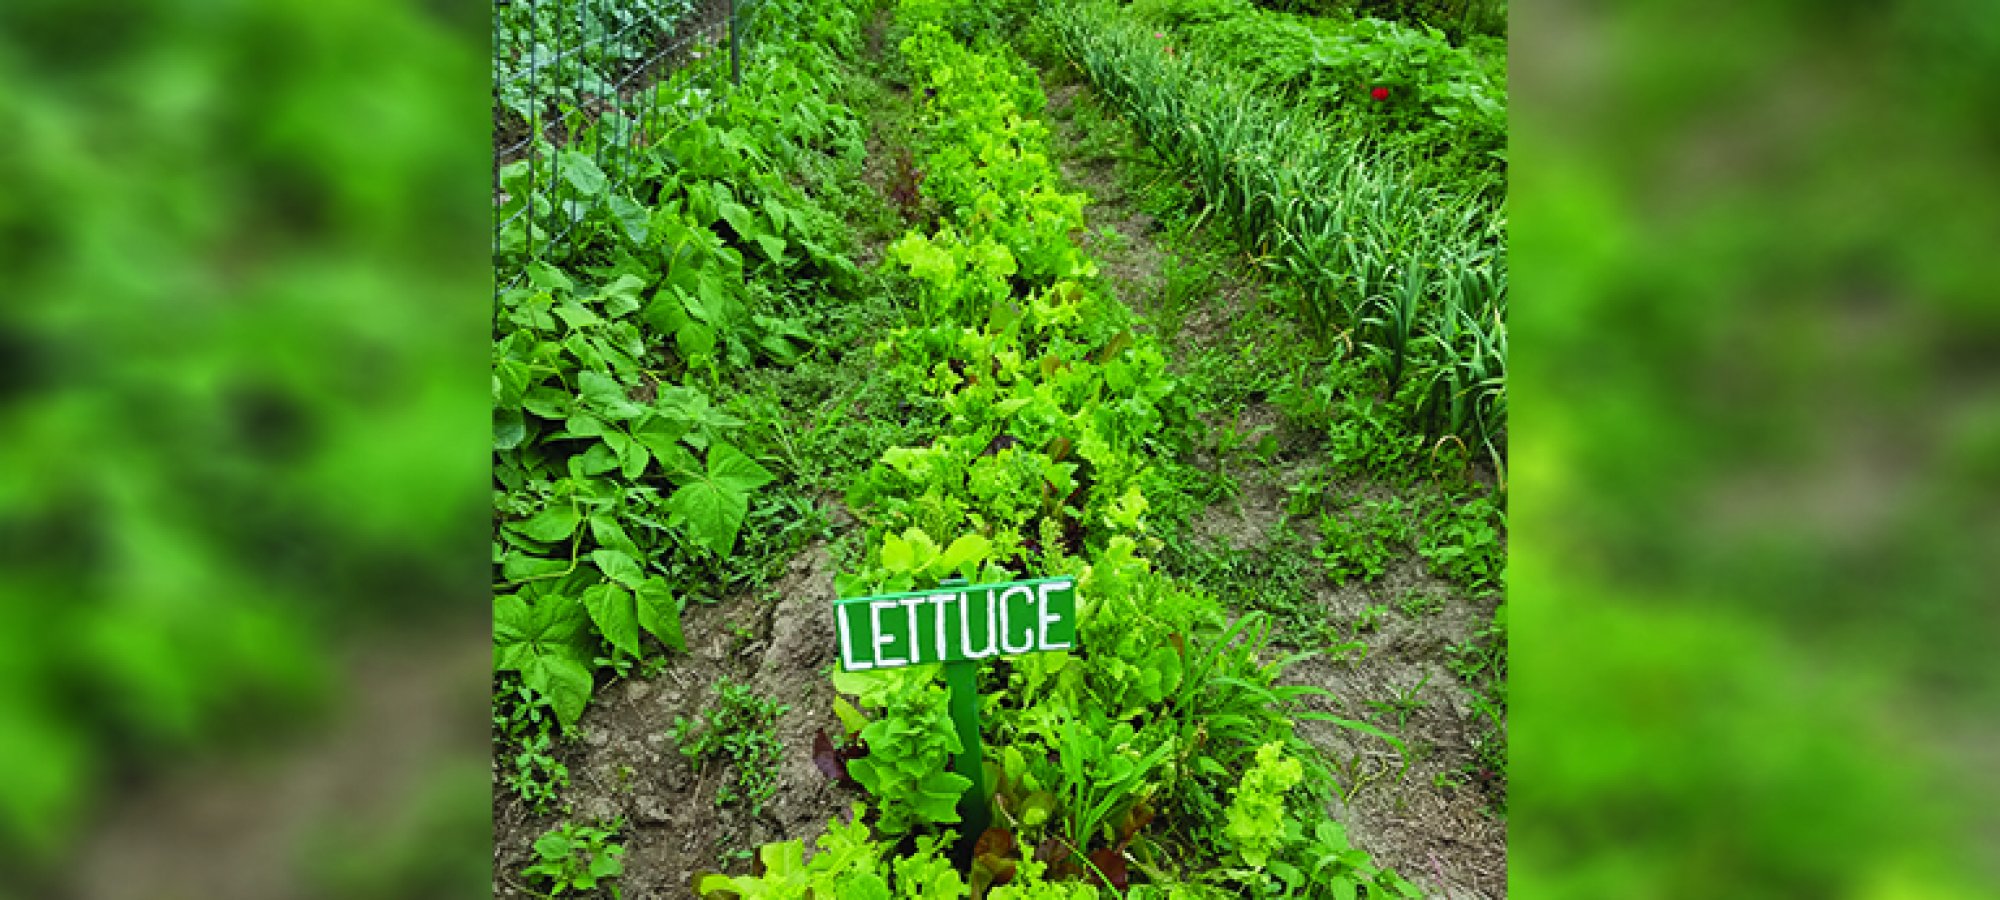 Lettuce row